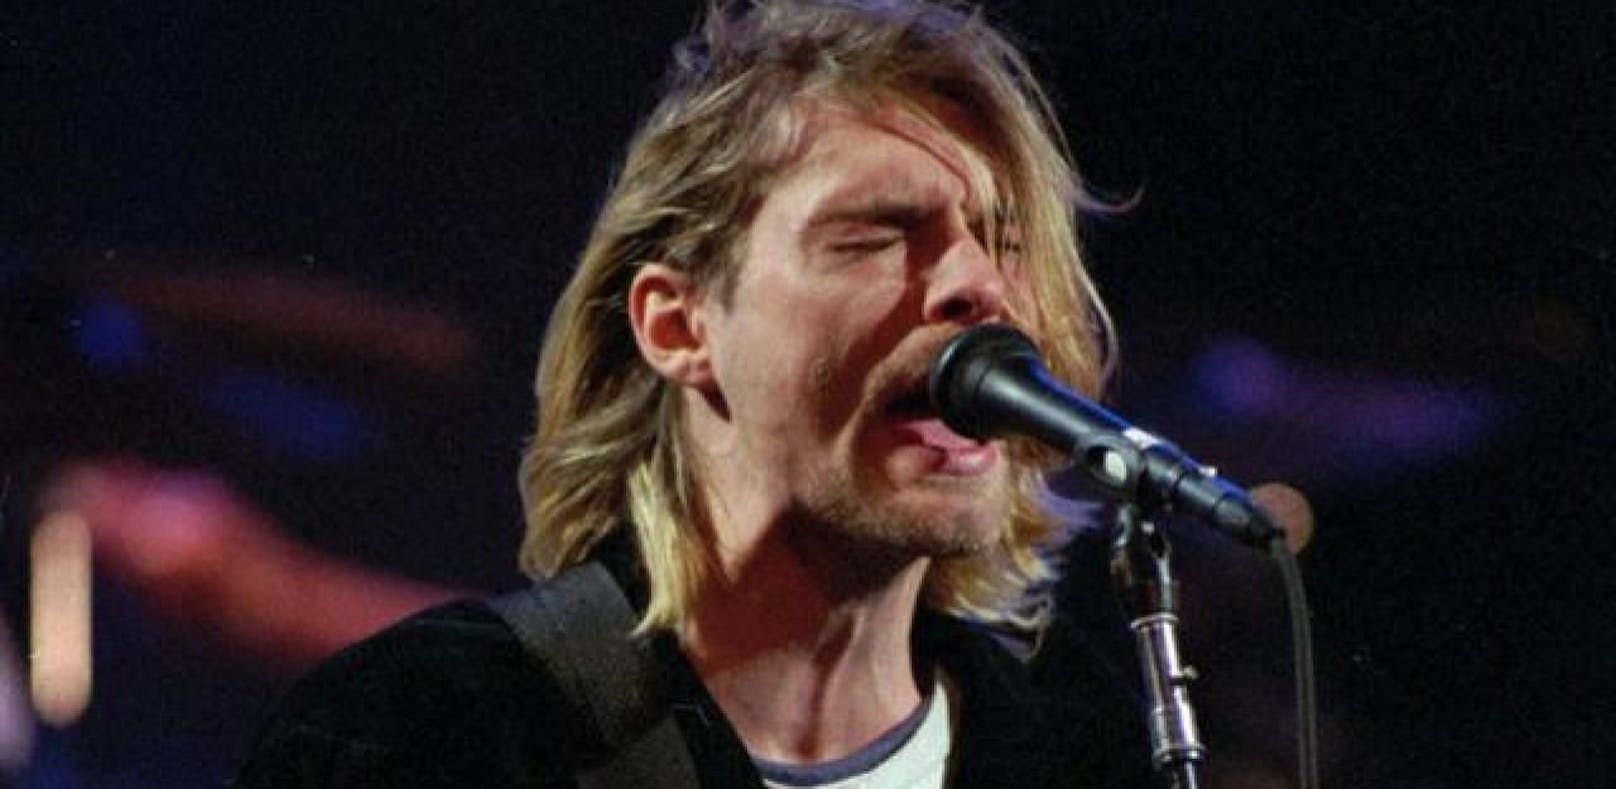 Ehefrau gratuliert Kurt Cobain zum Geburtstag